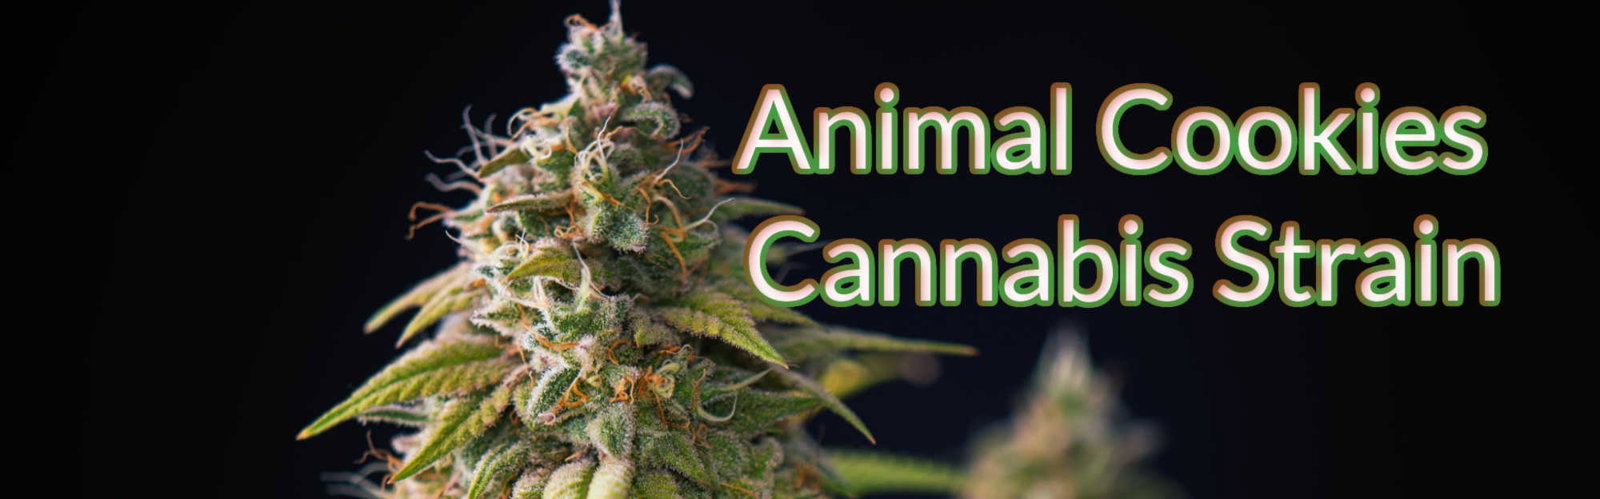 animal cookies Cannabis Strain 